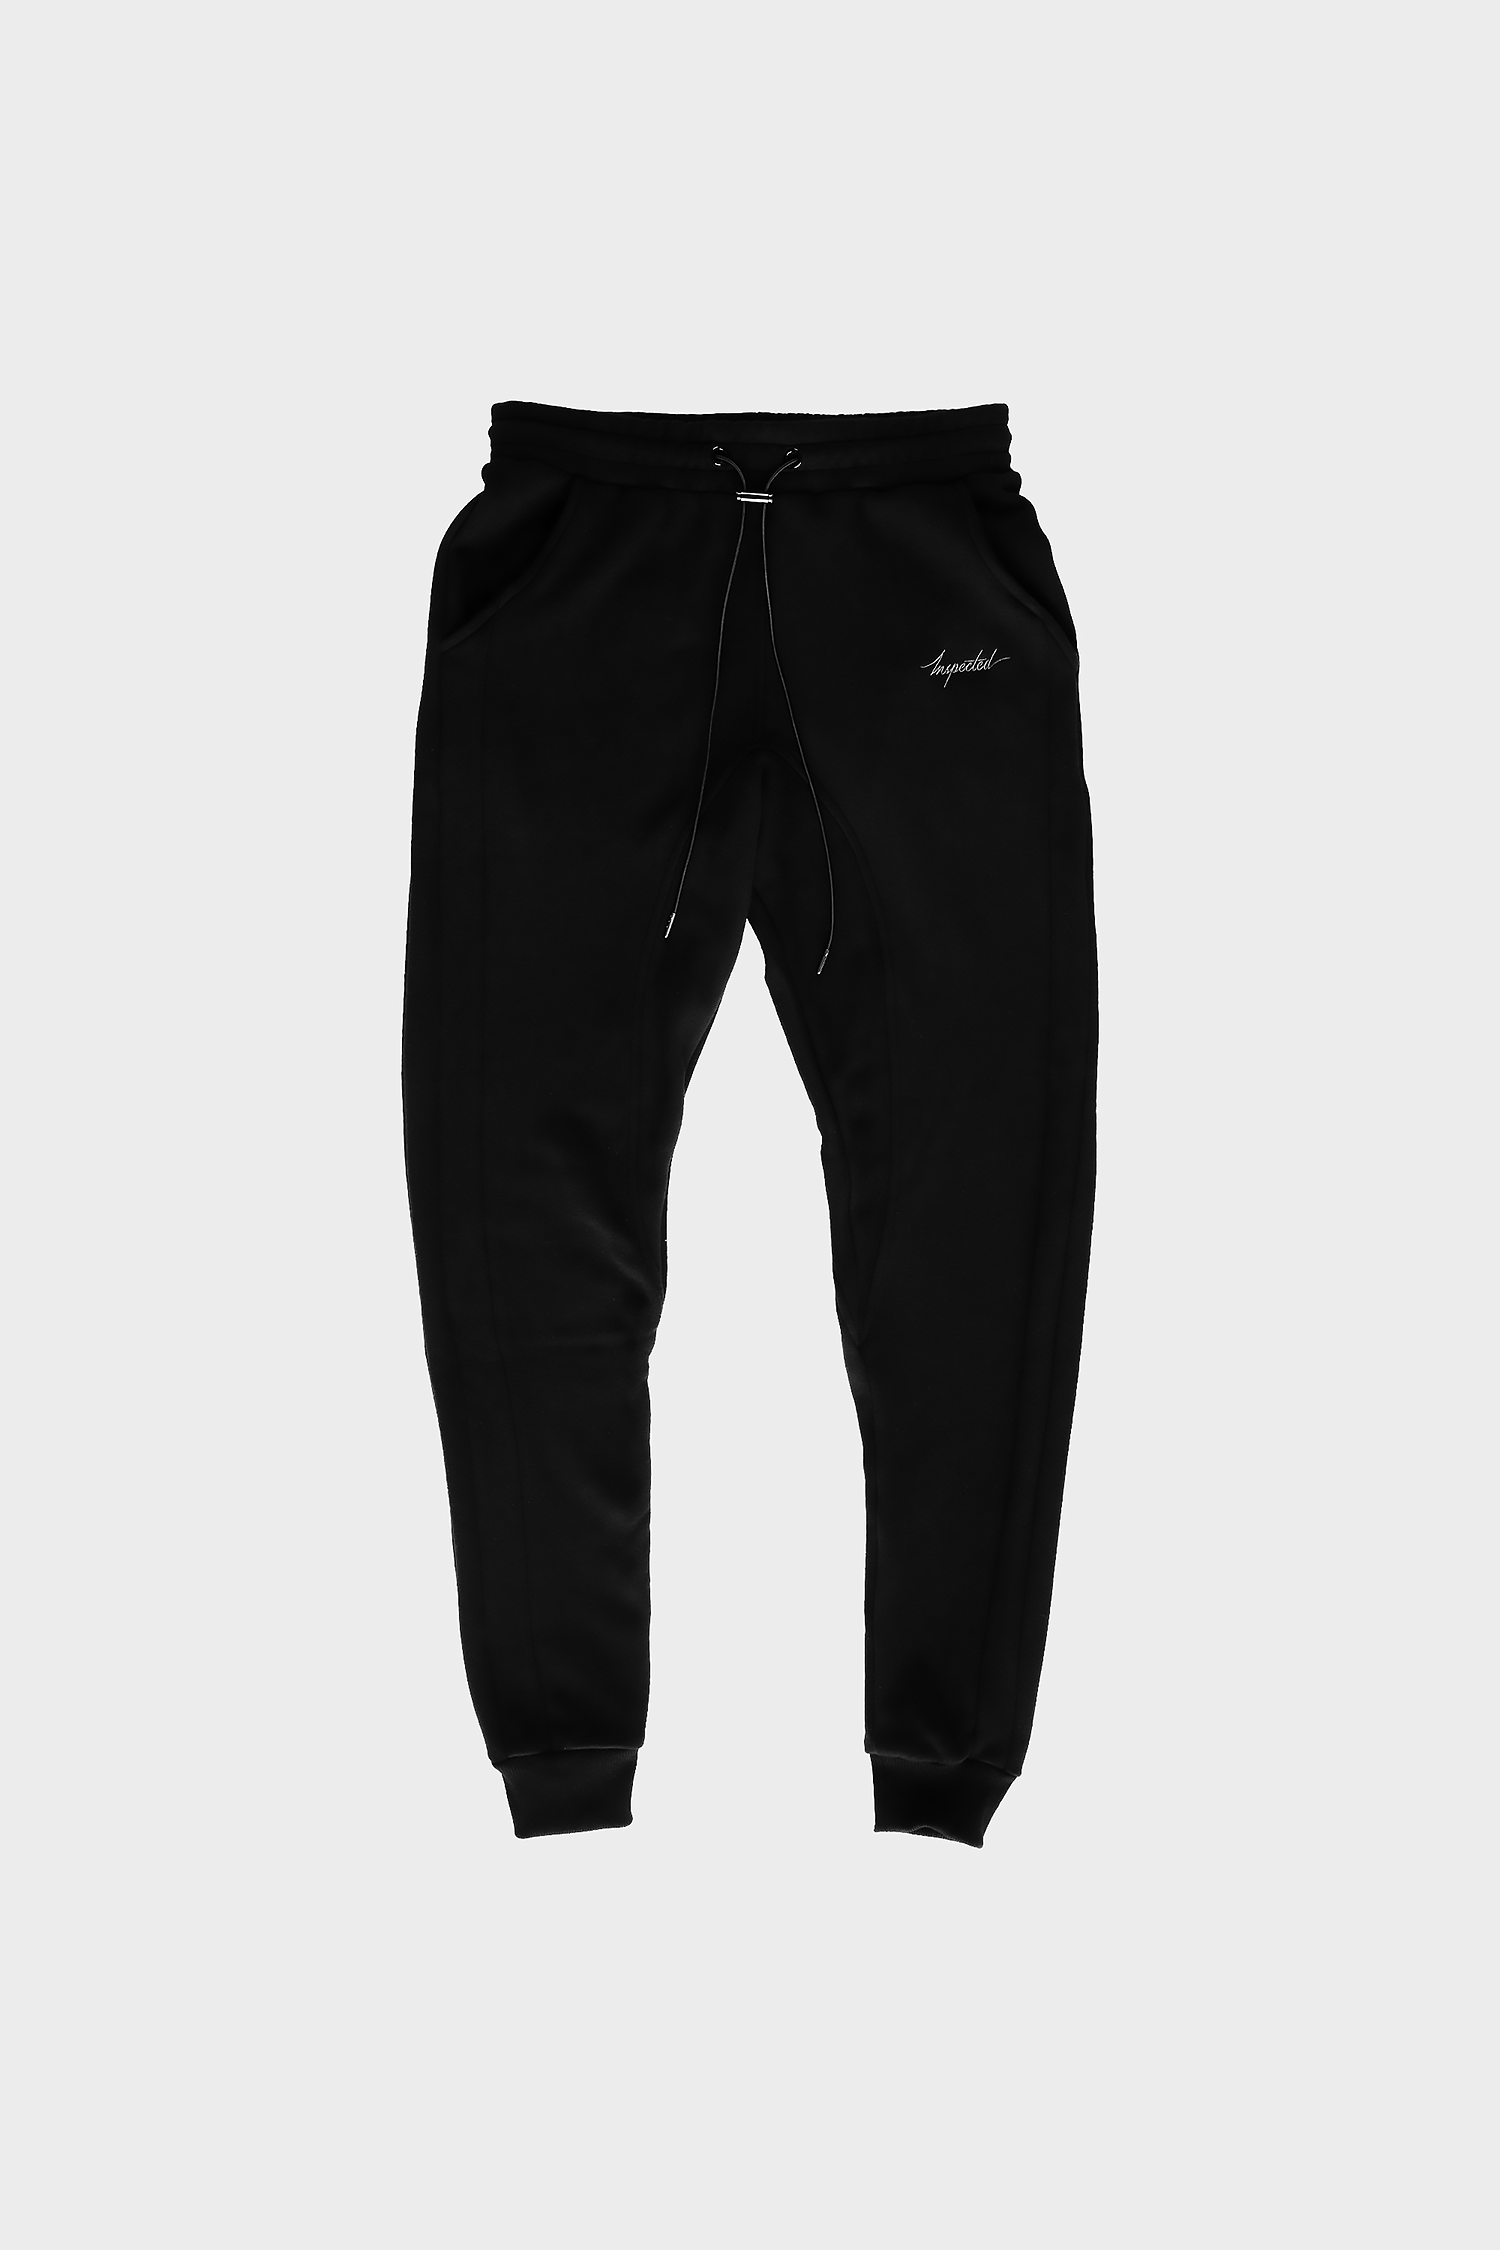 Remastered Sweatpants — Black on Black